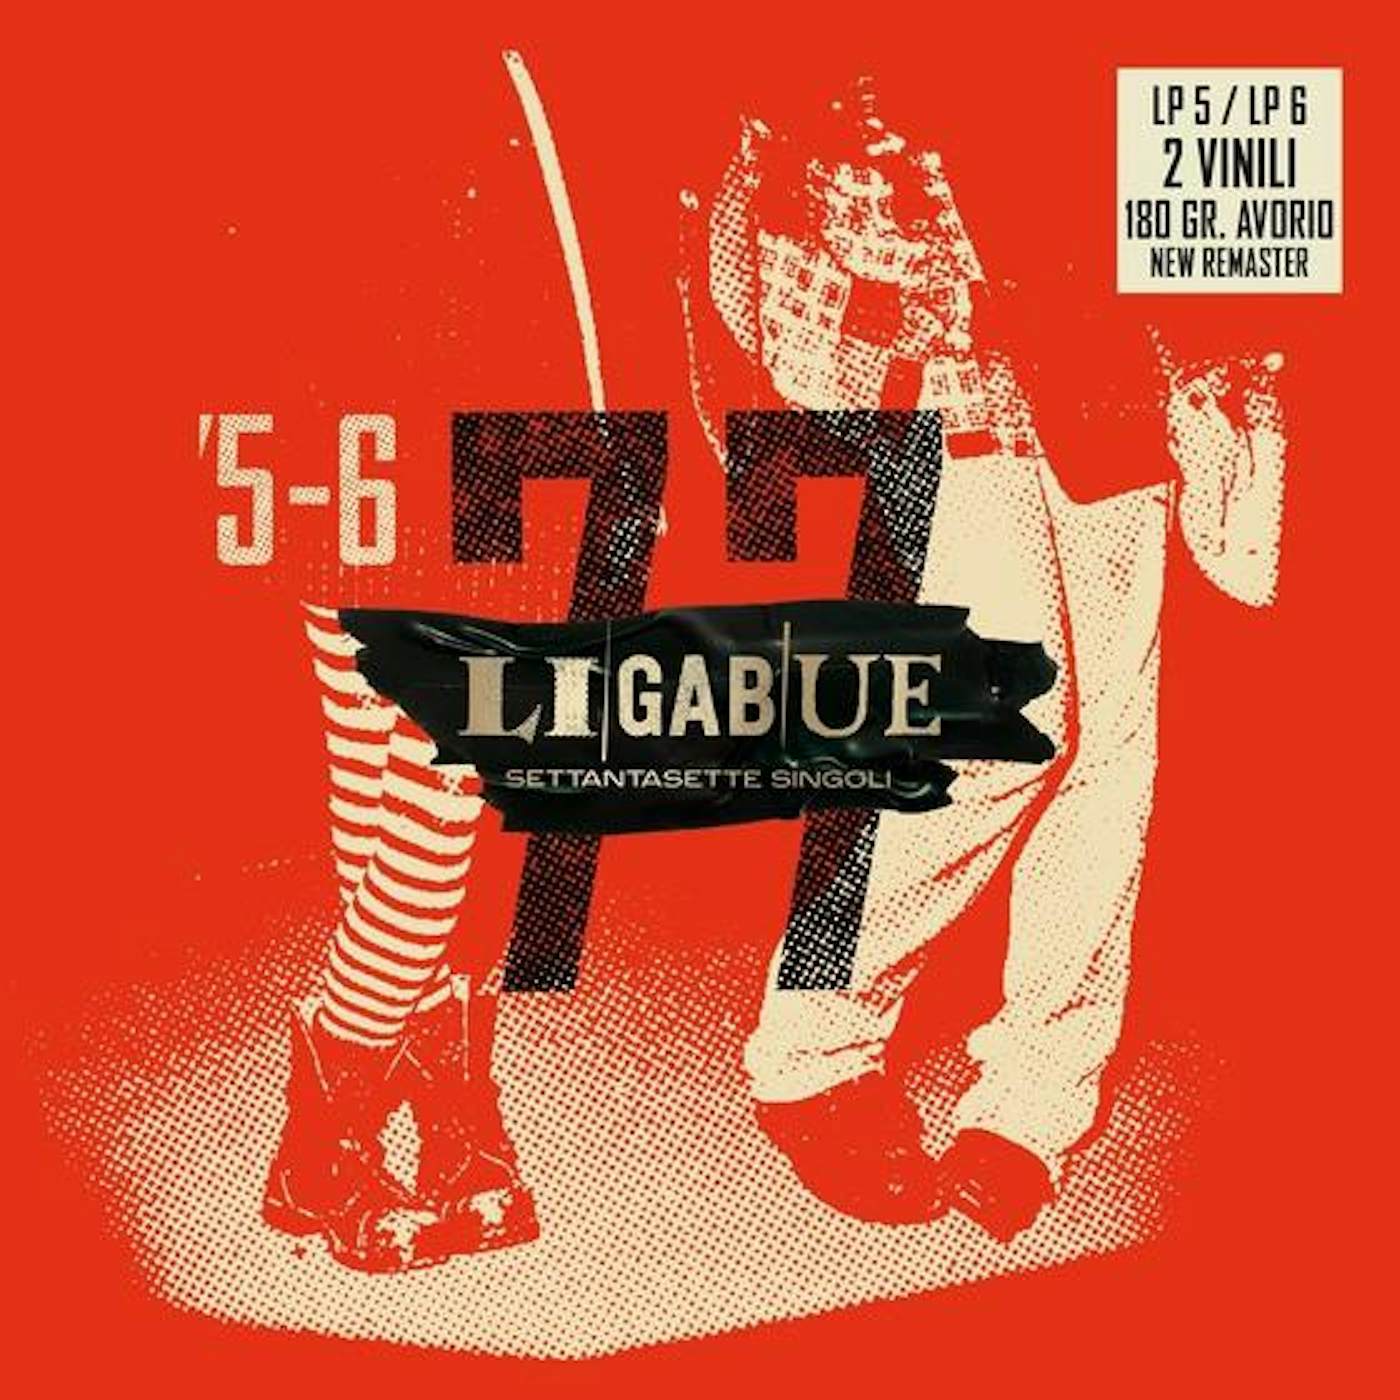 Ligabue 77 SINGOLI / LP 5-LP 6 Vinyl Record